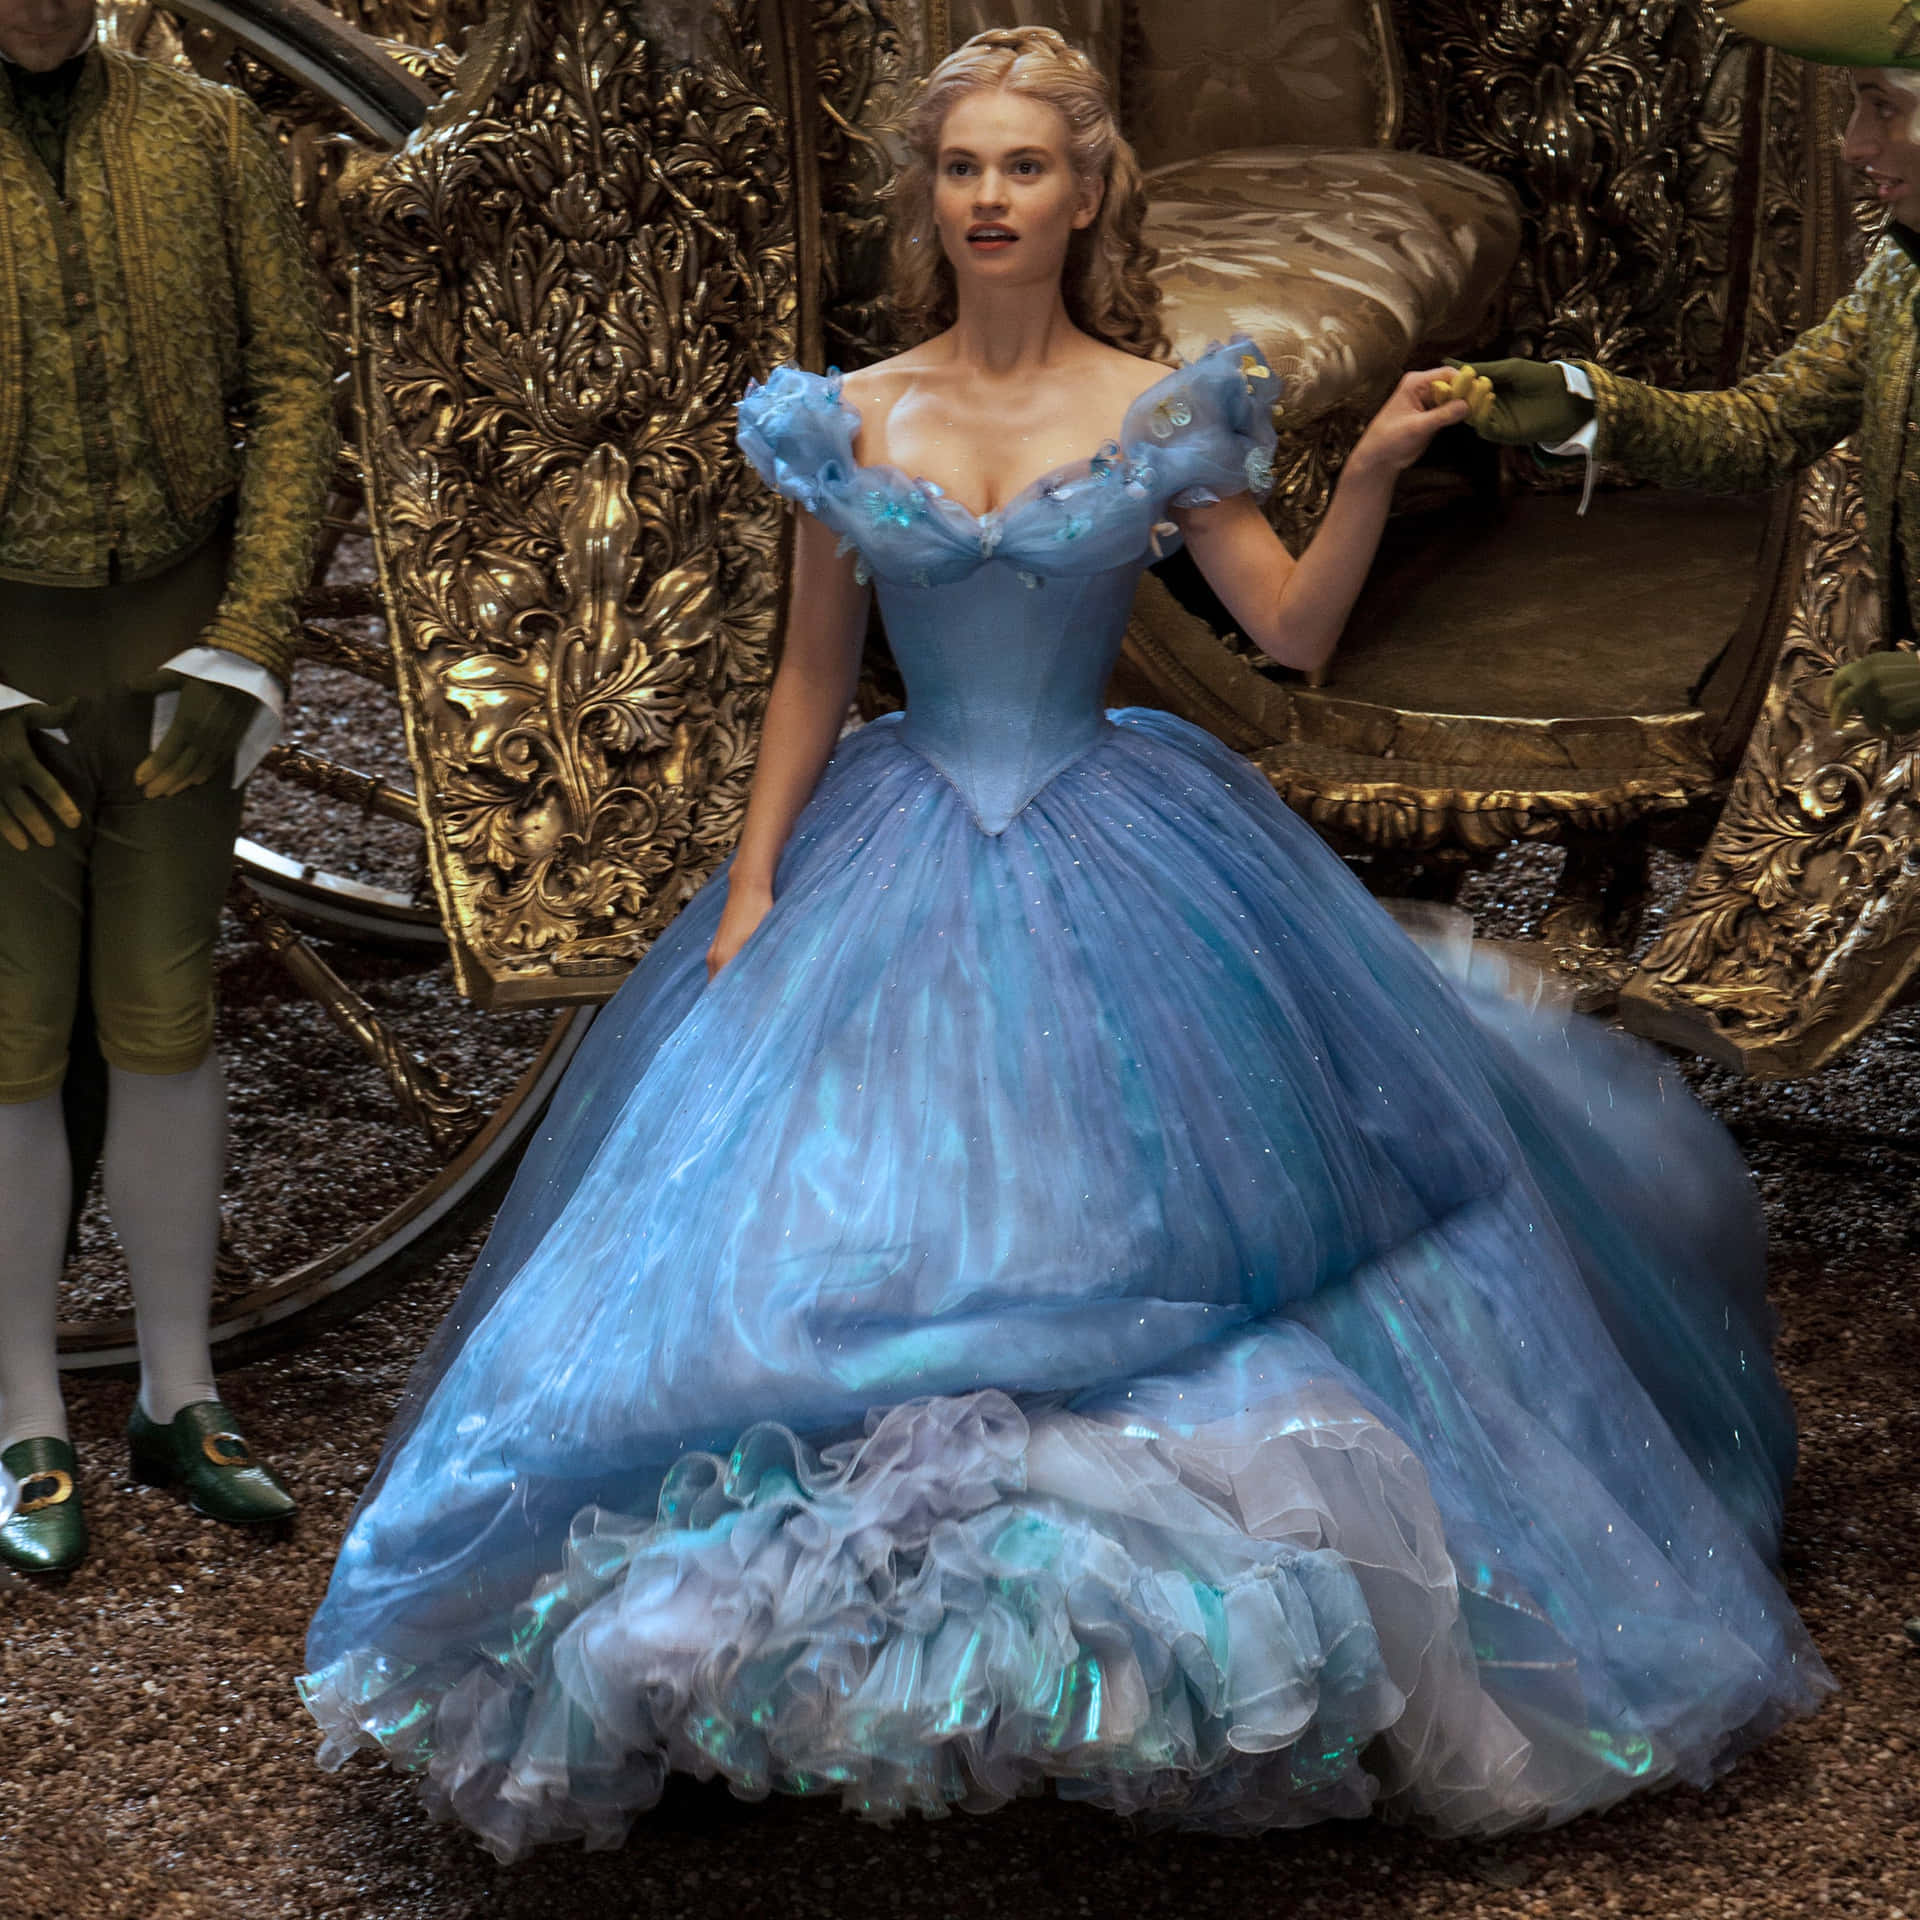 Cinderella's fairy godmother makes magic happen